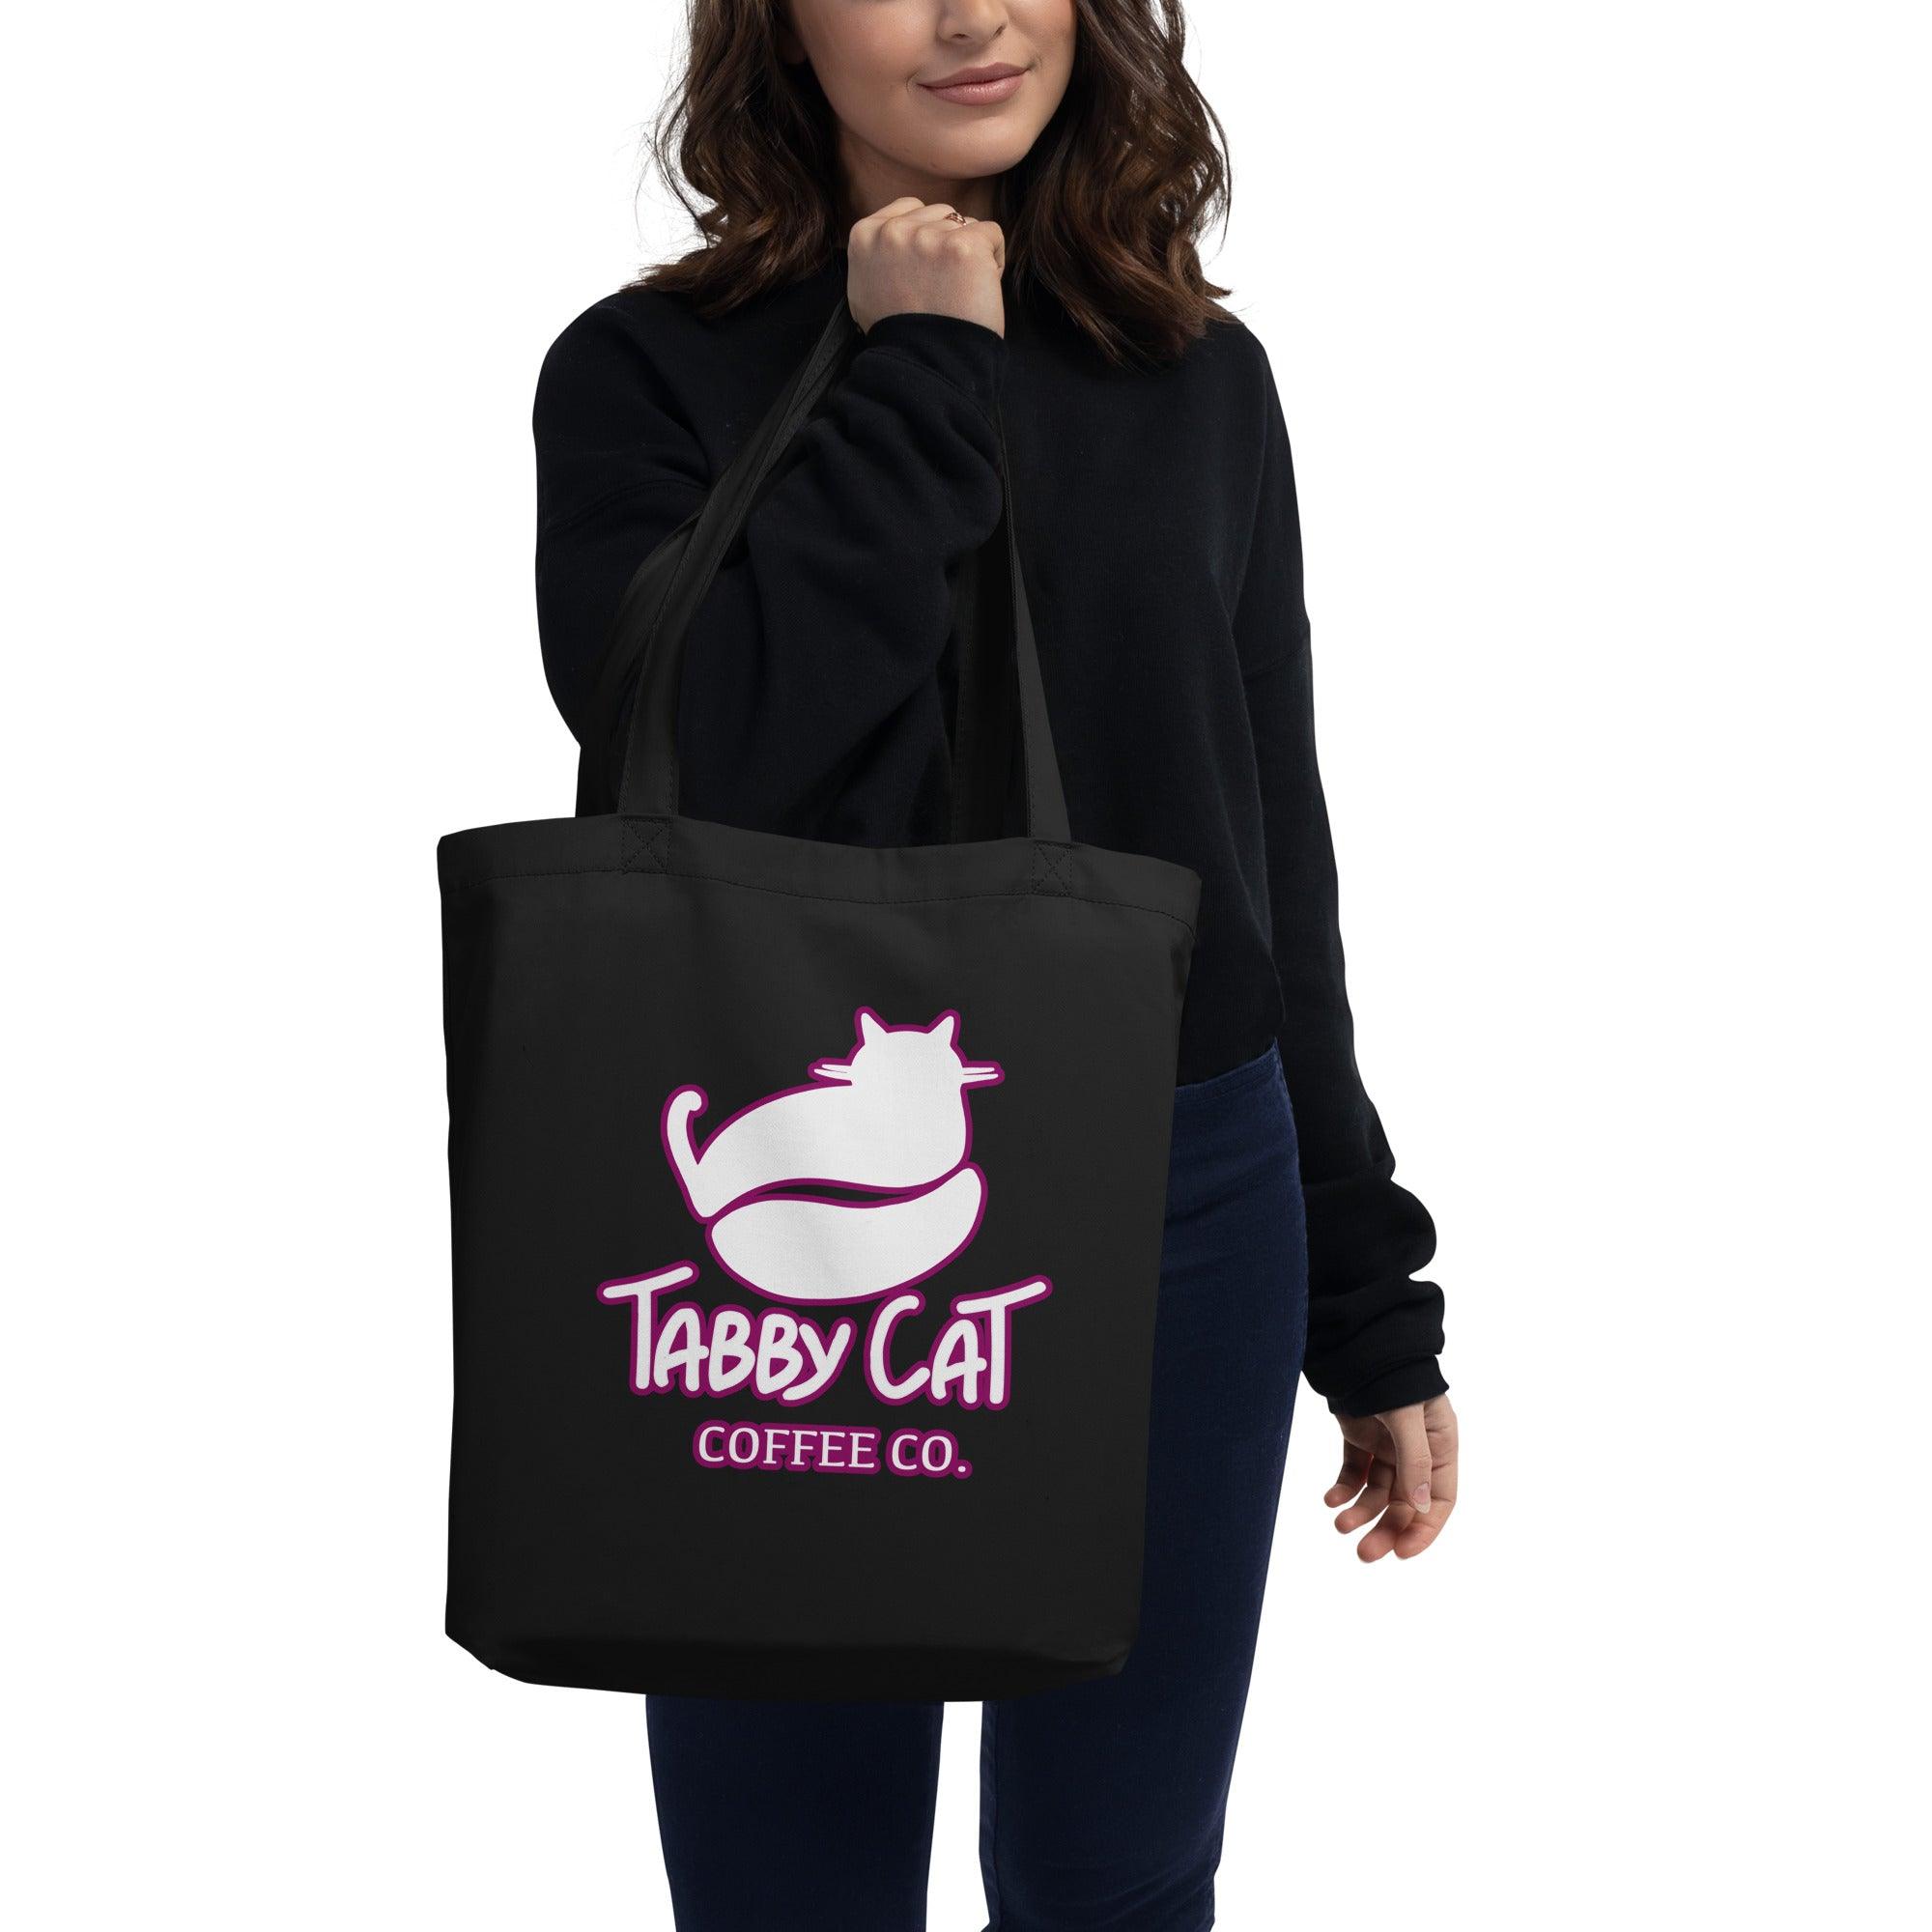 Signature Collection, Shop Women's Bags